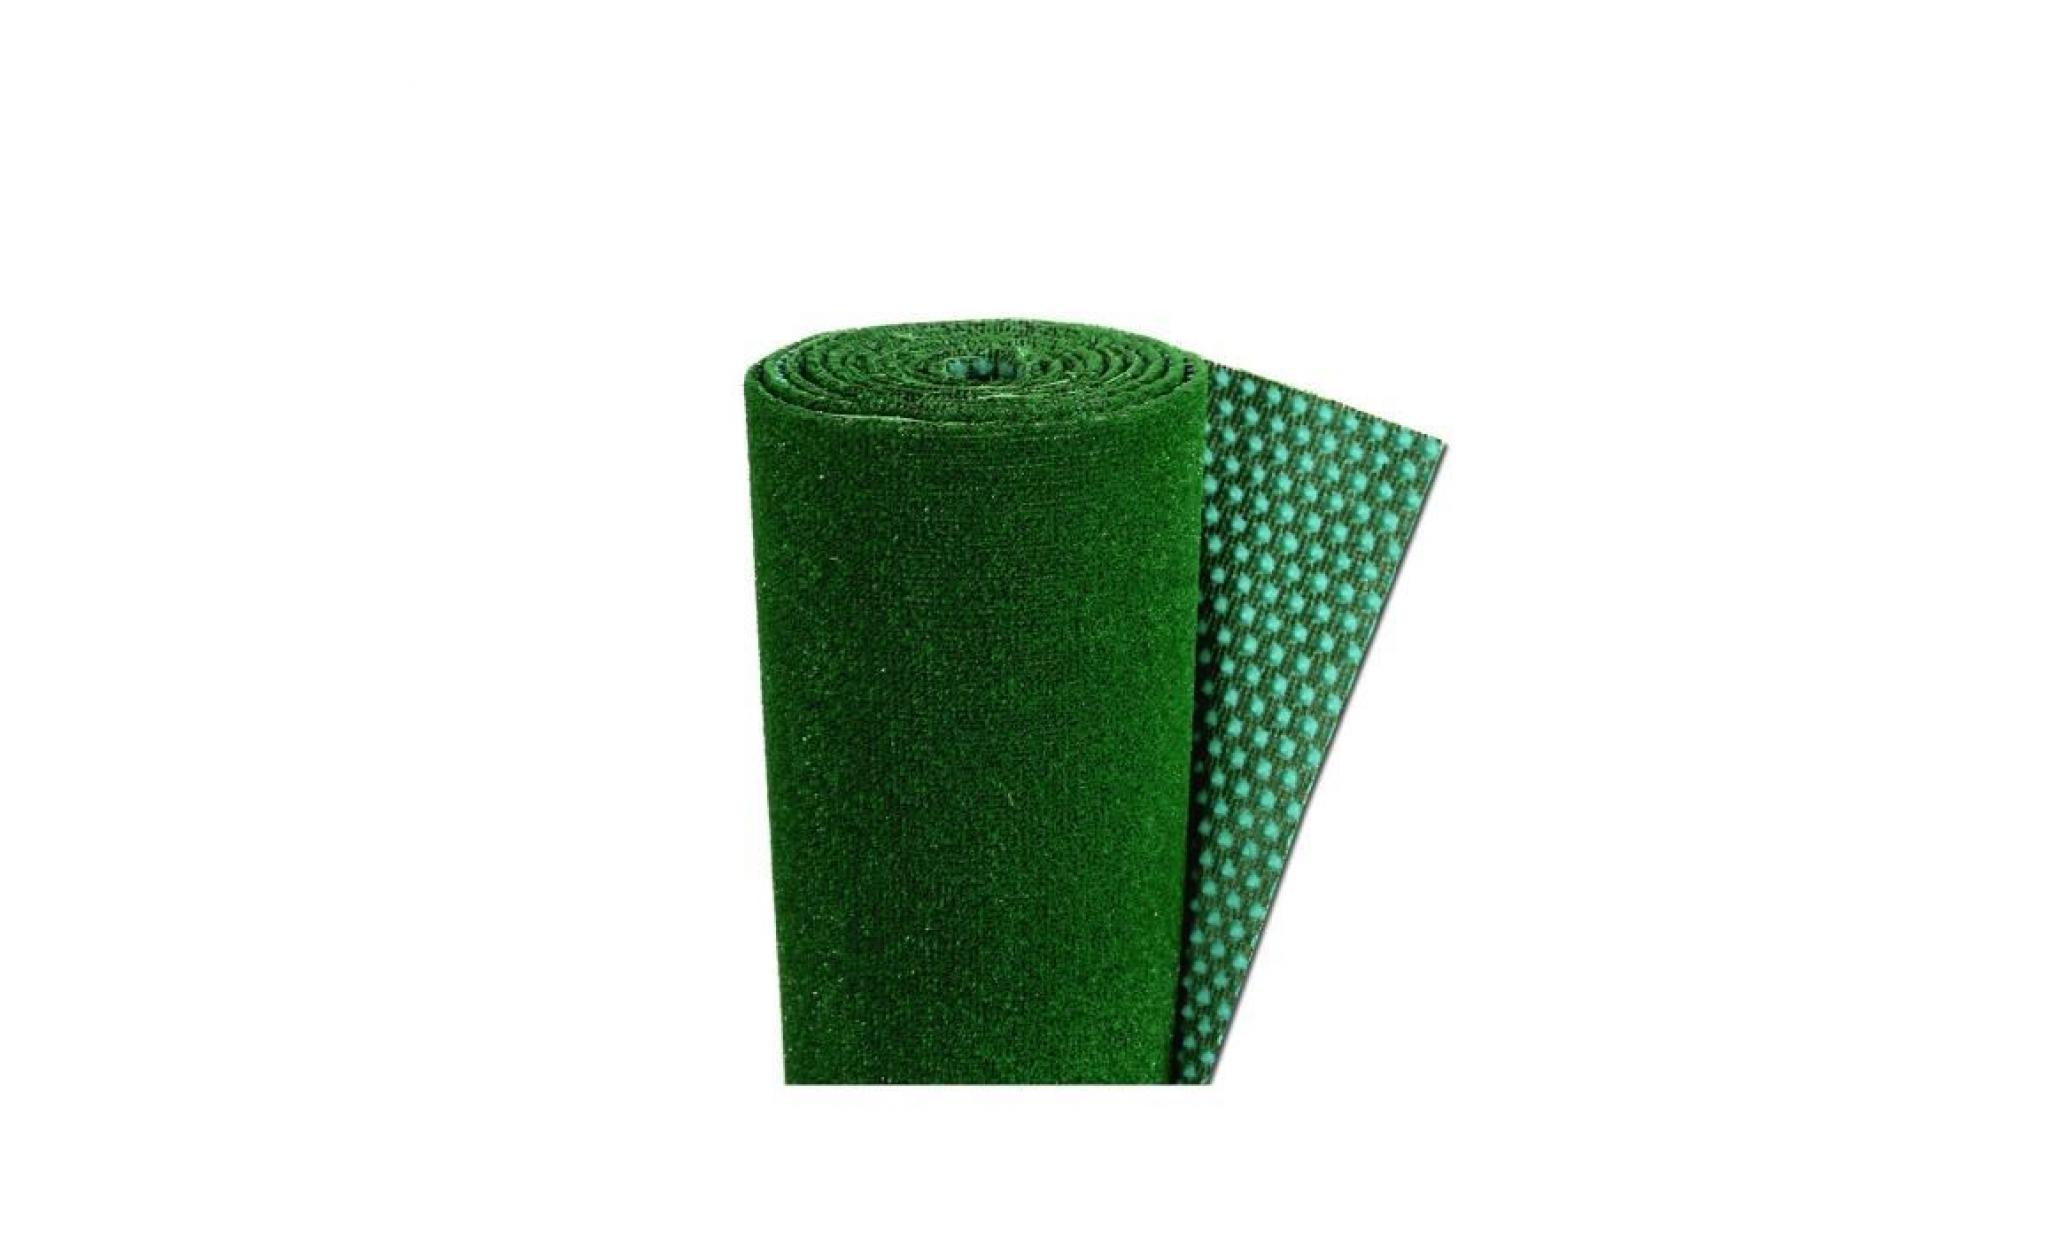 york   tapis type gazon artificiel avec nubs – pour jardin, terrasse, balcon   vert   [200x500 cm] pas cher